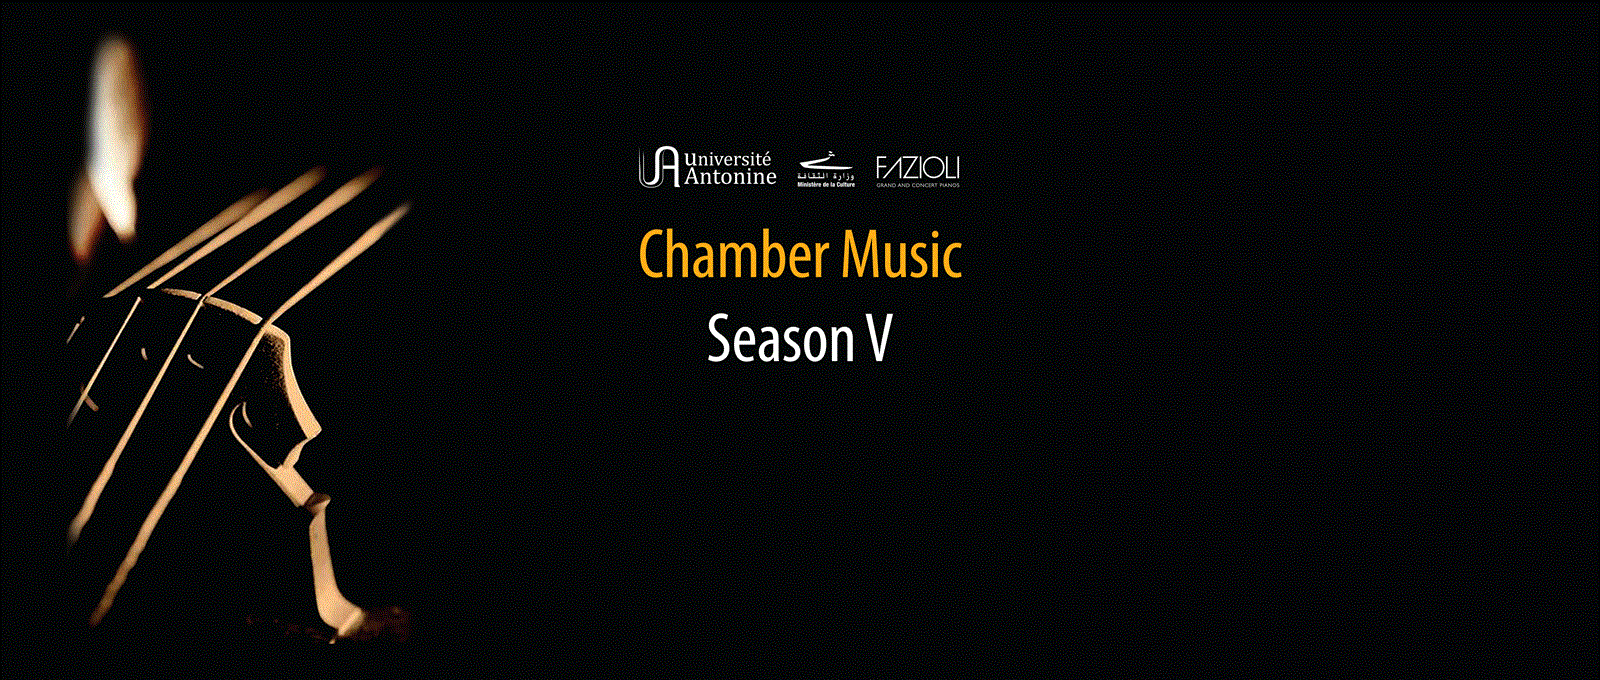 Chamber Music Season V